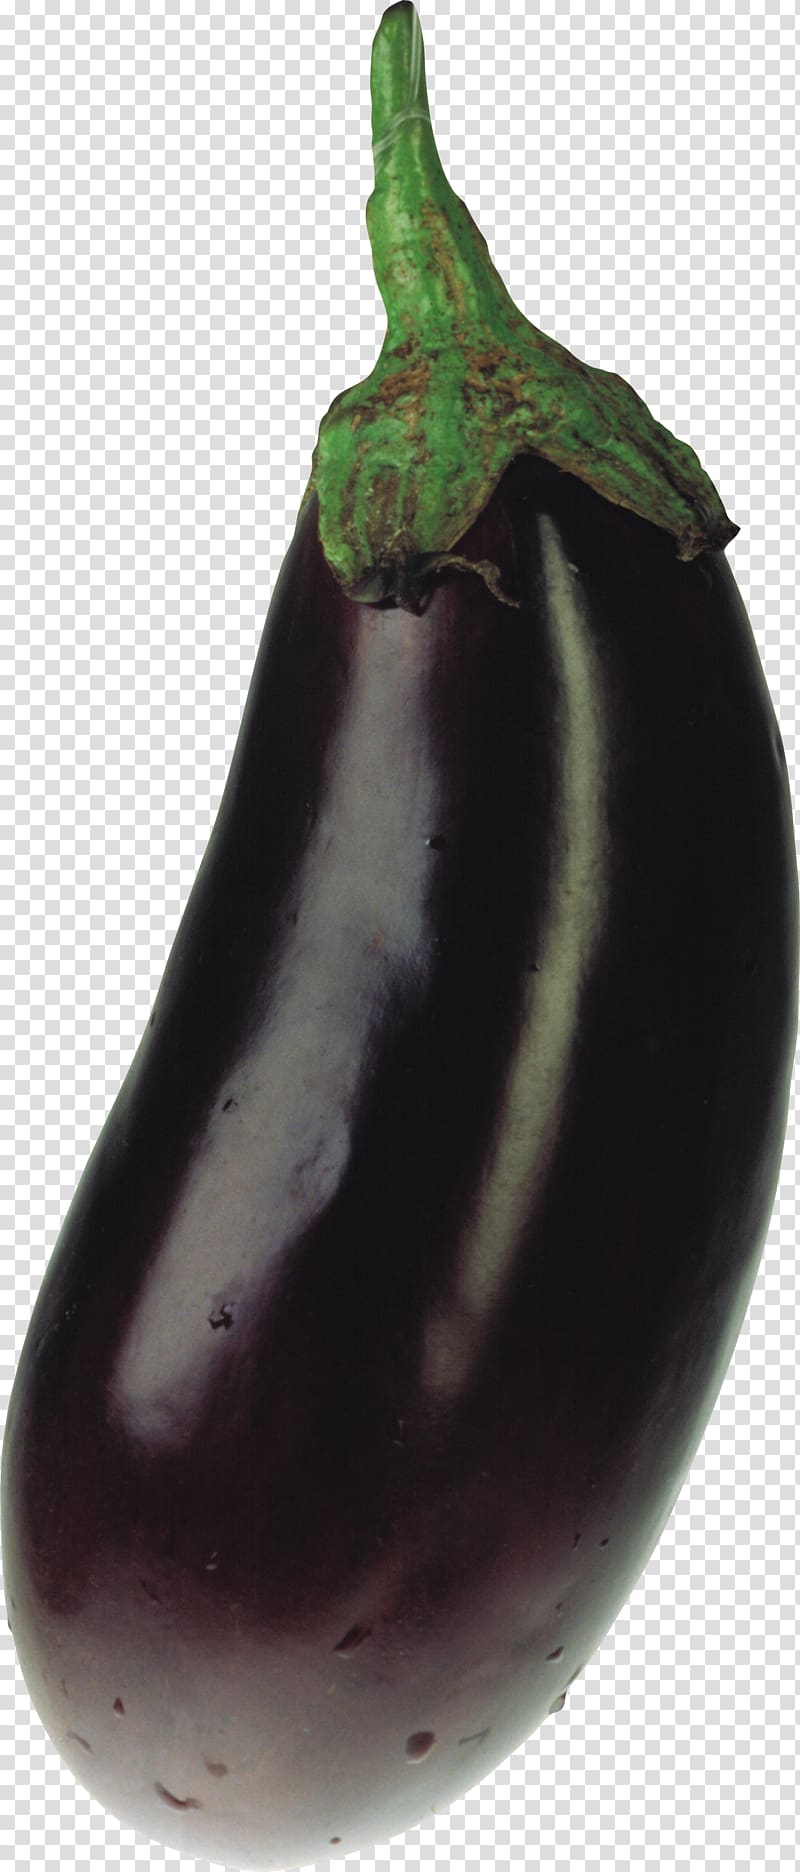 Eggplant transparent background PNG clipart